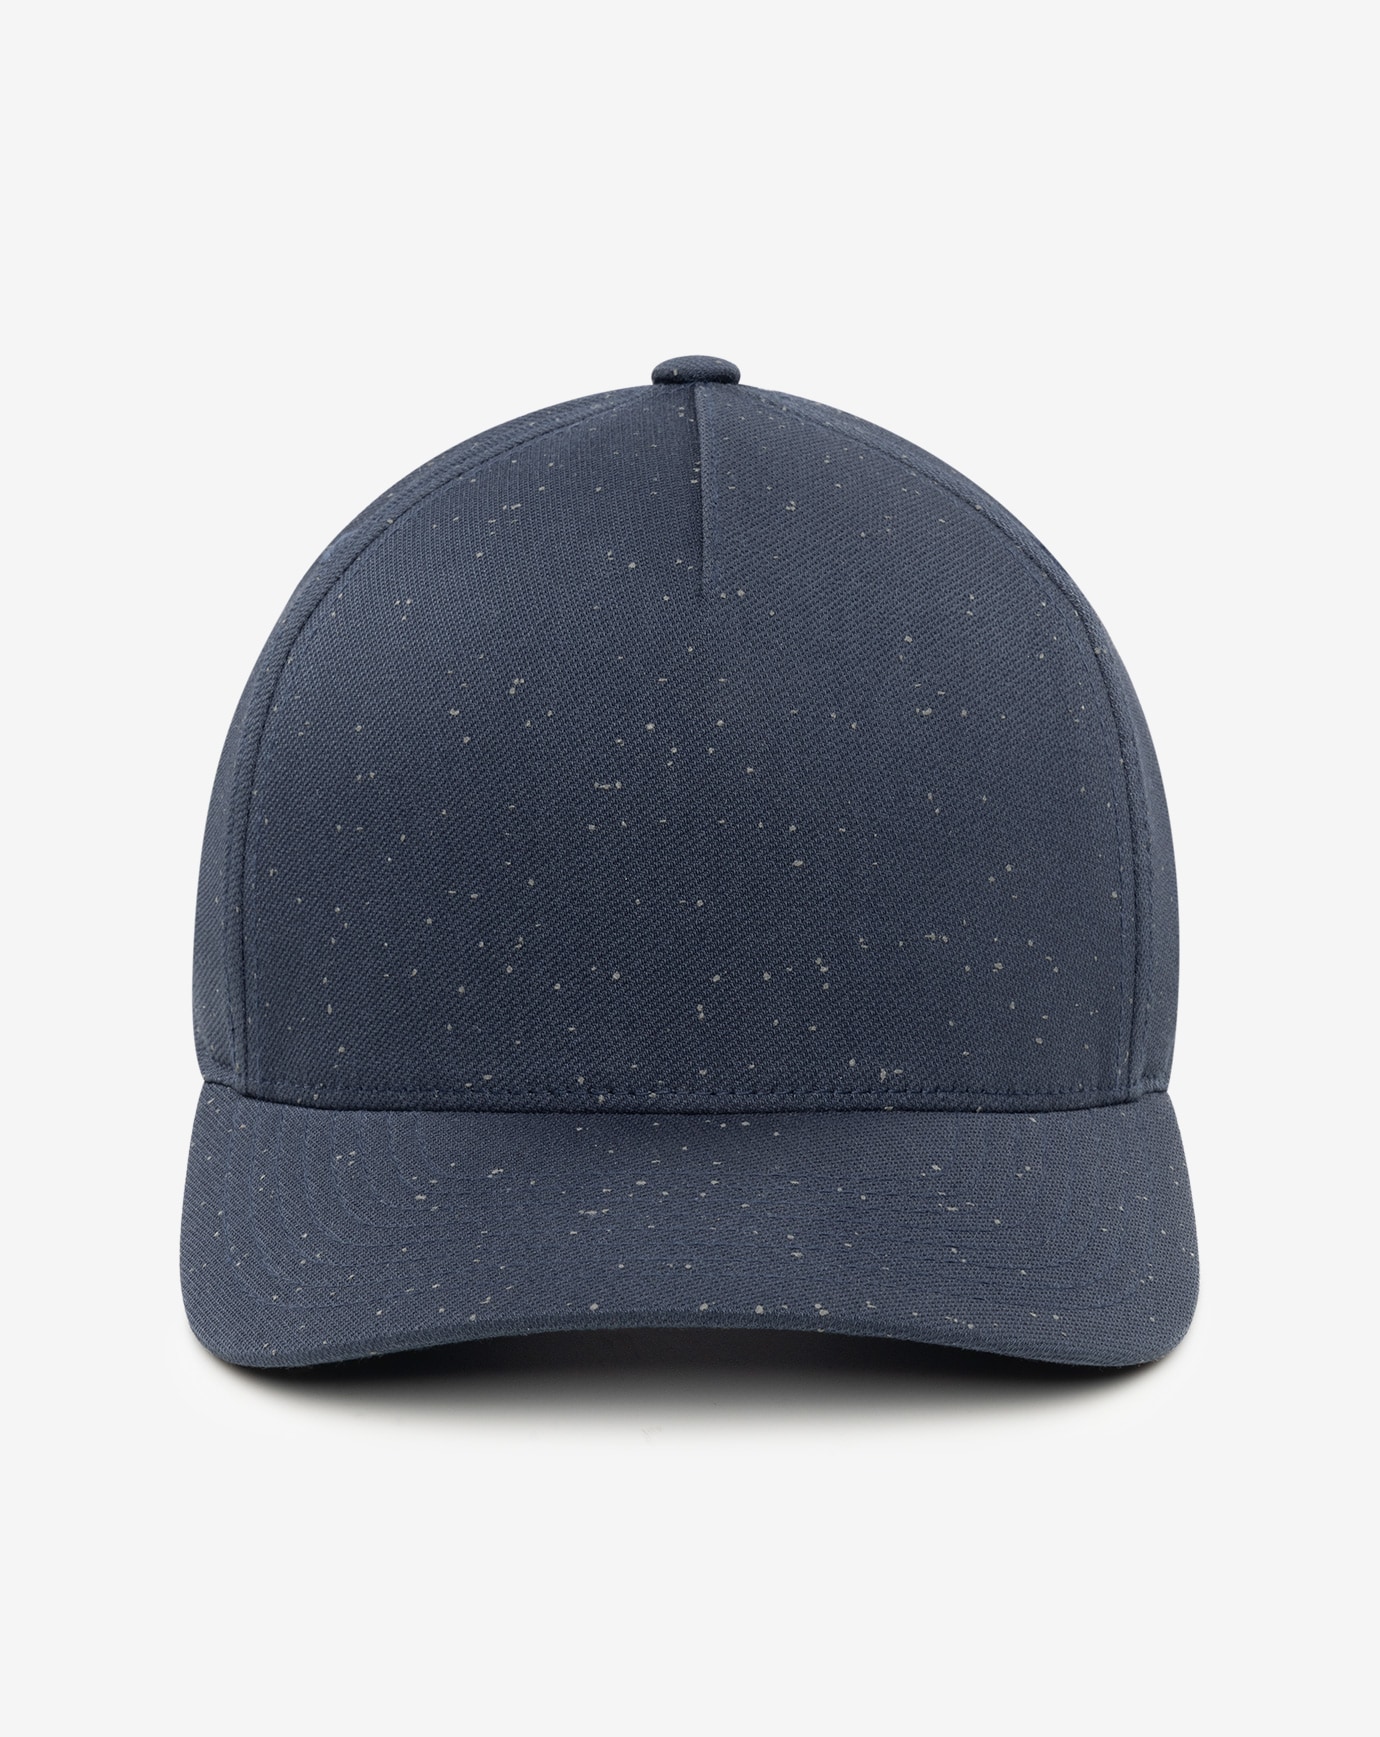 Eclipse - Snapback Hat 